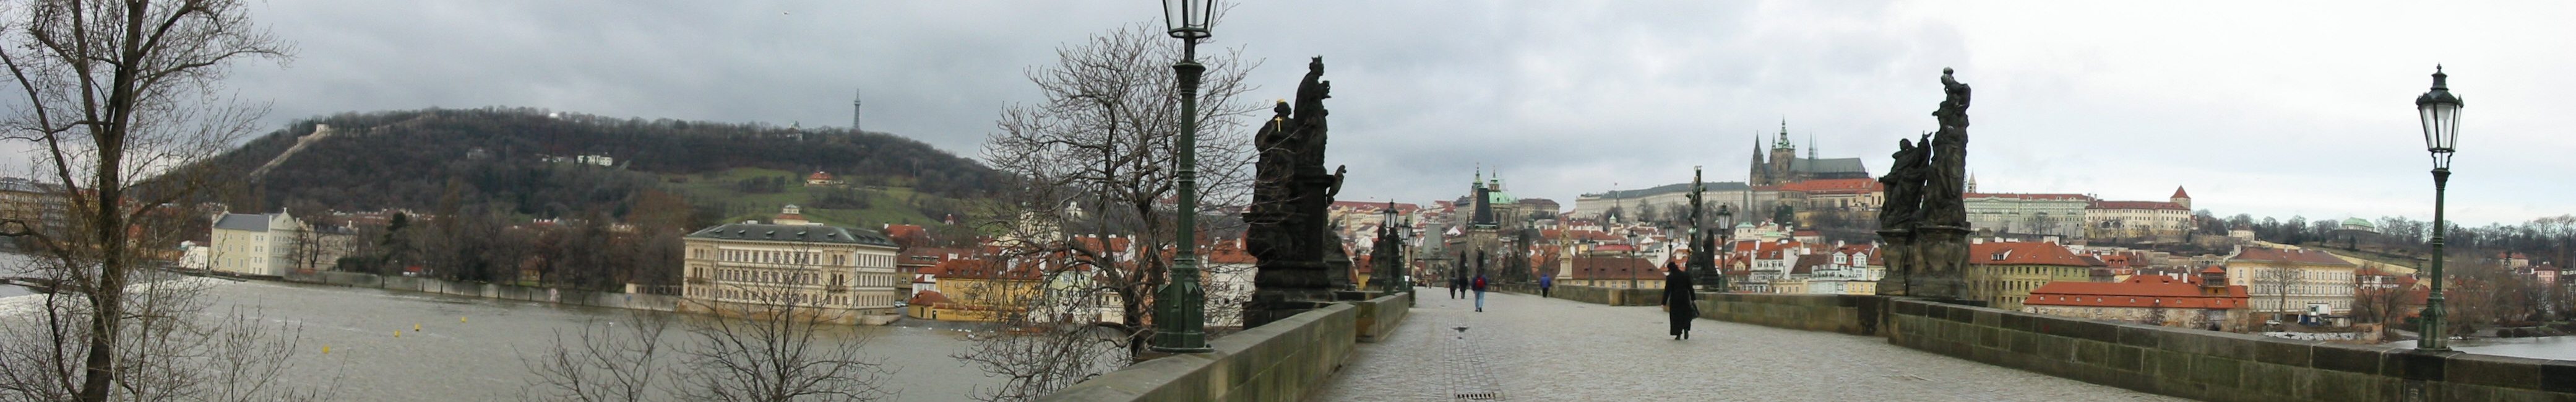 Praha, Karluv Most